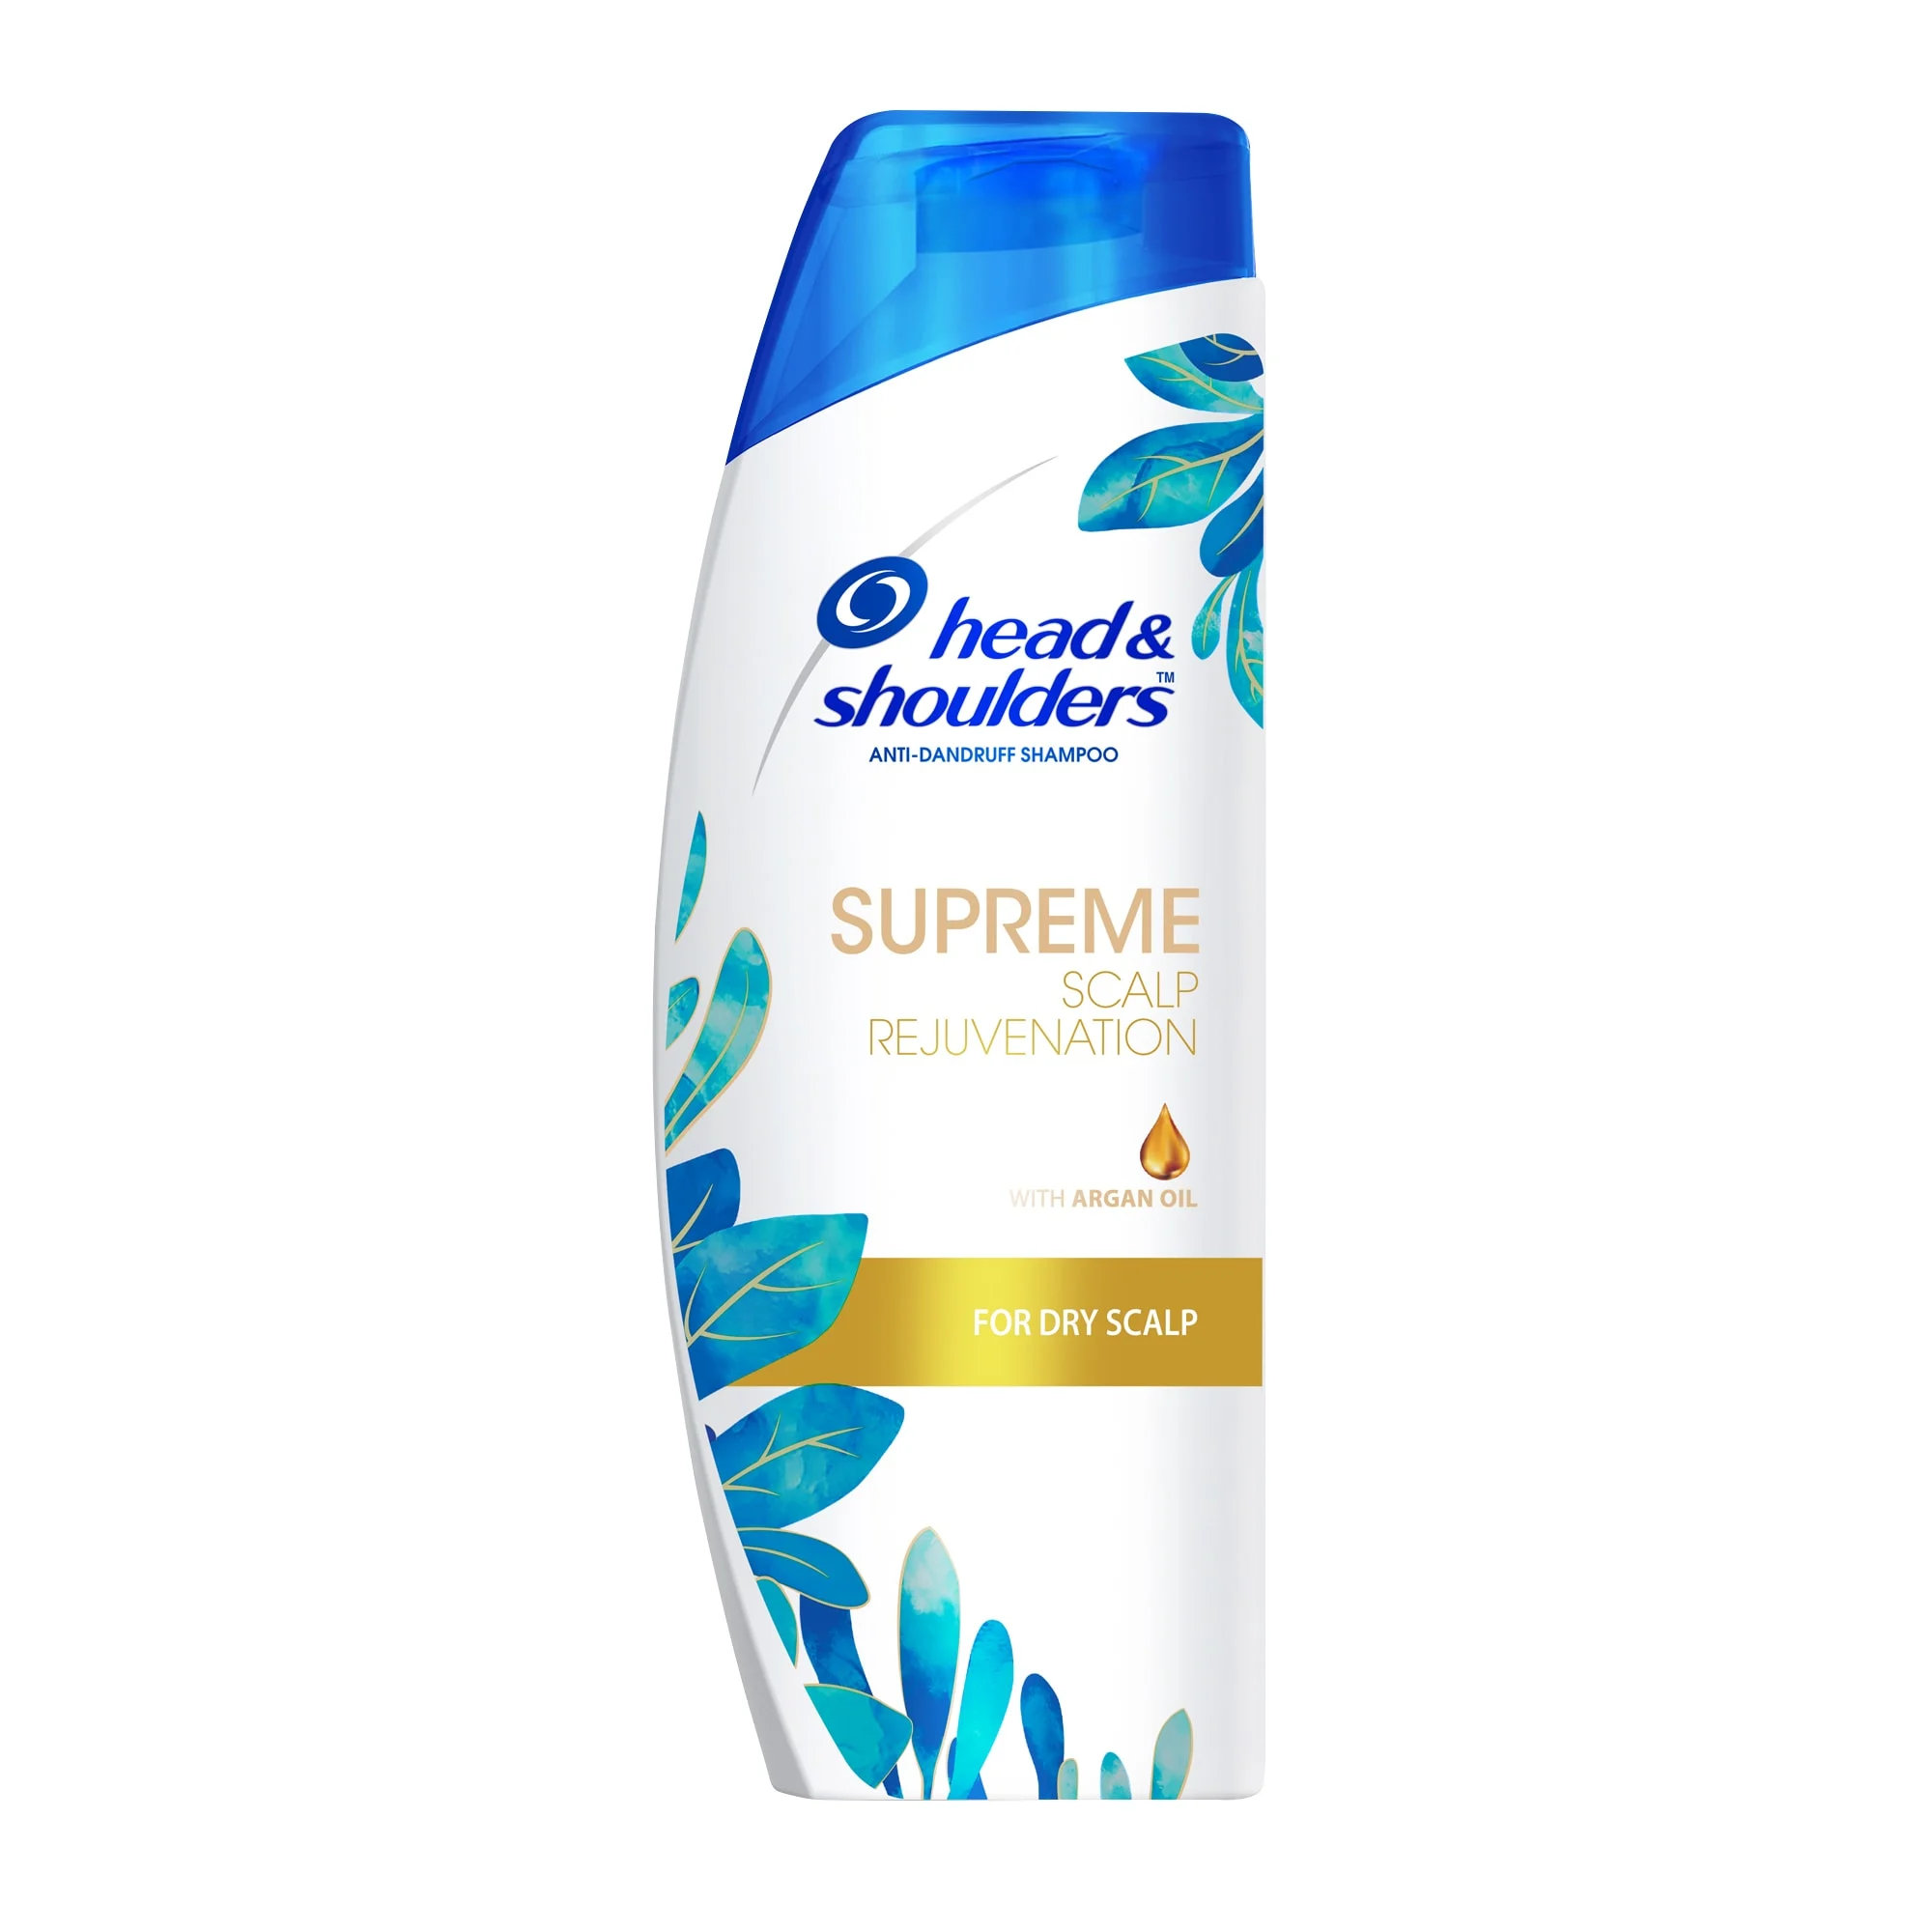 7. Supreme scalp rejuvenation shampoo: